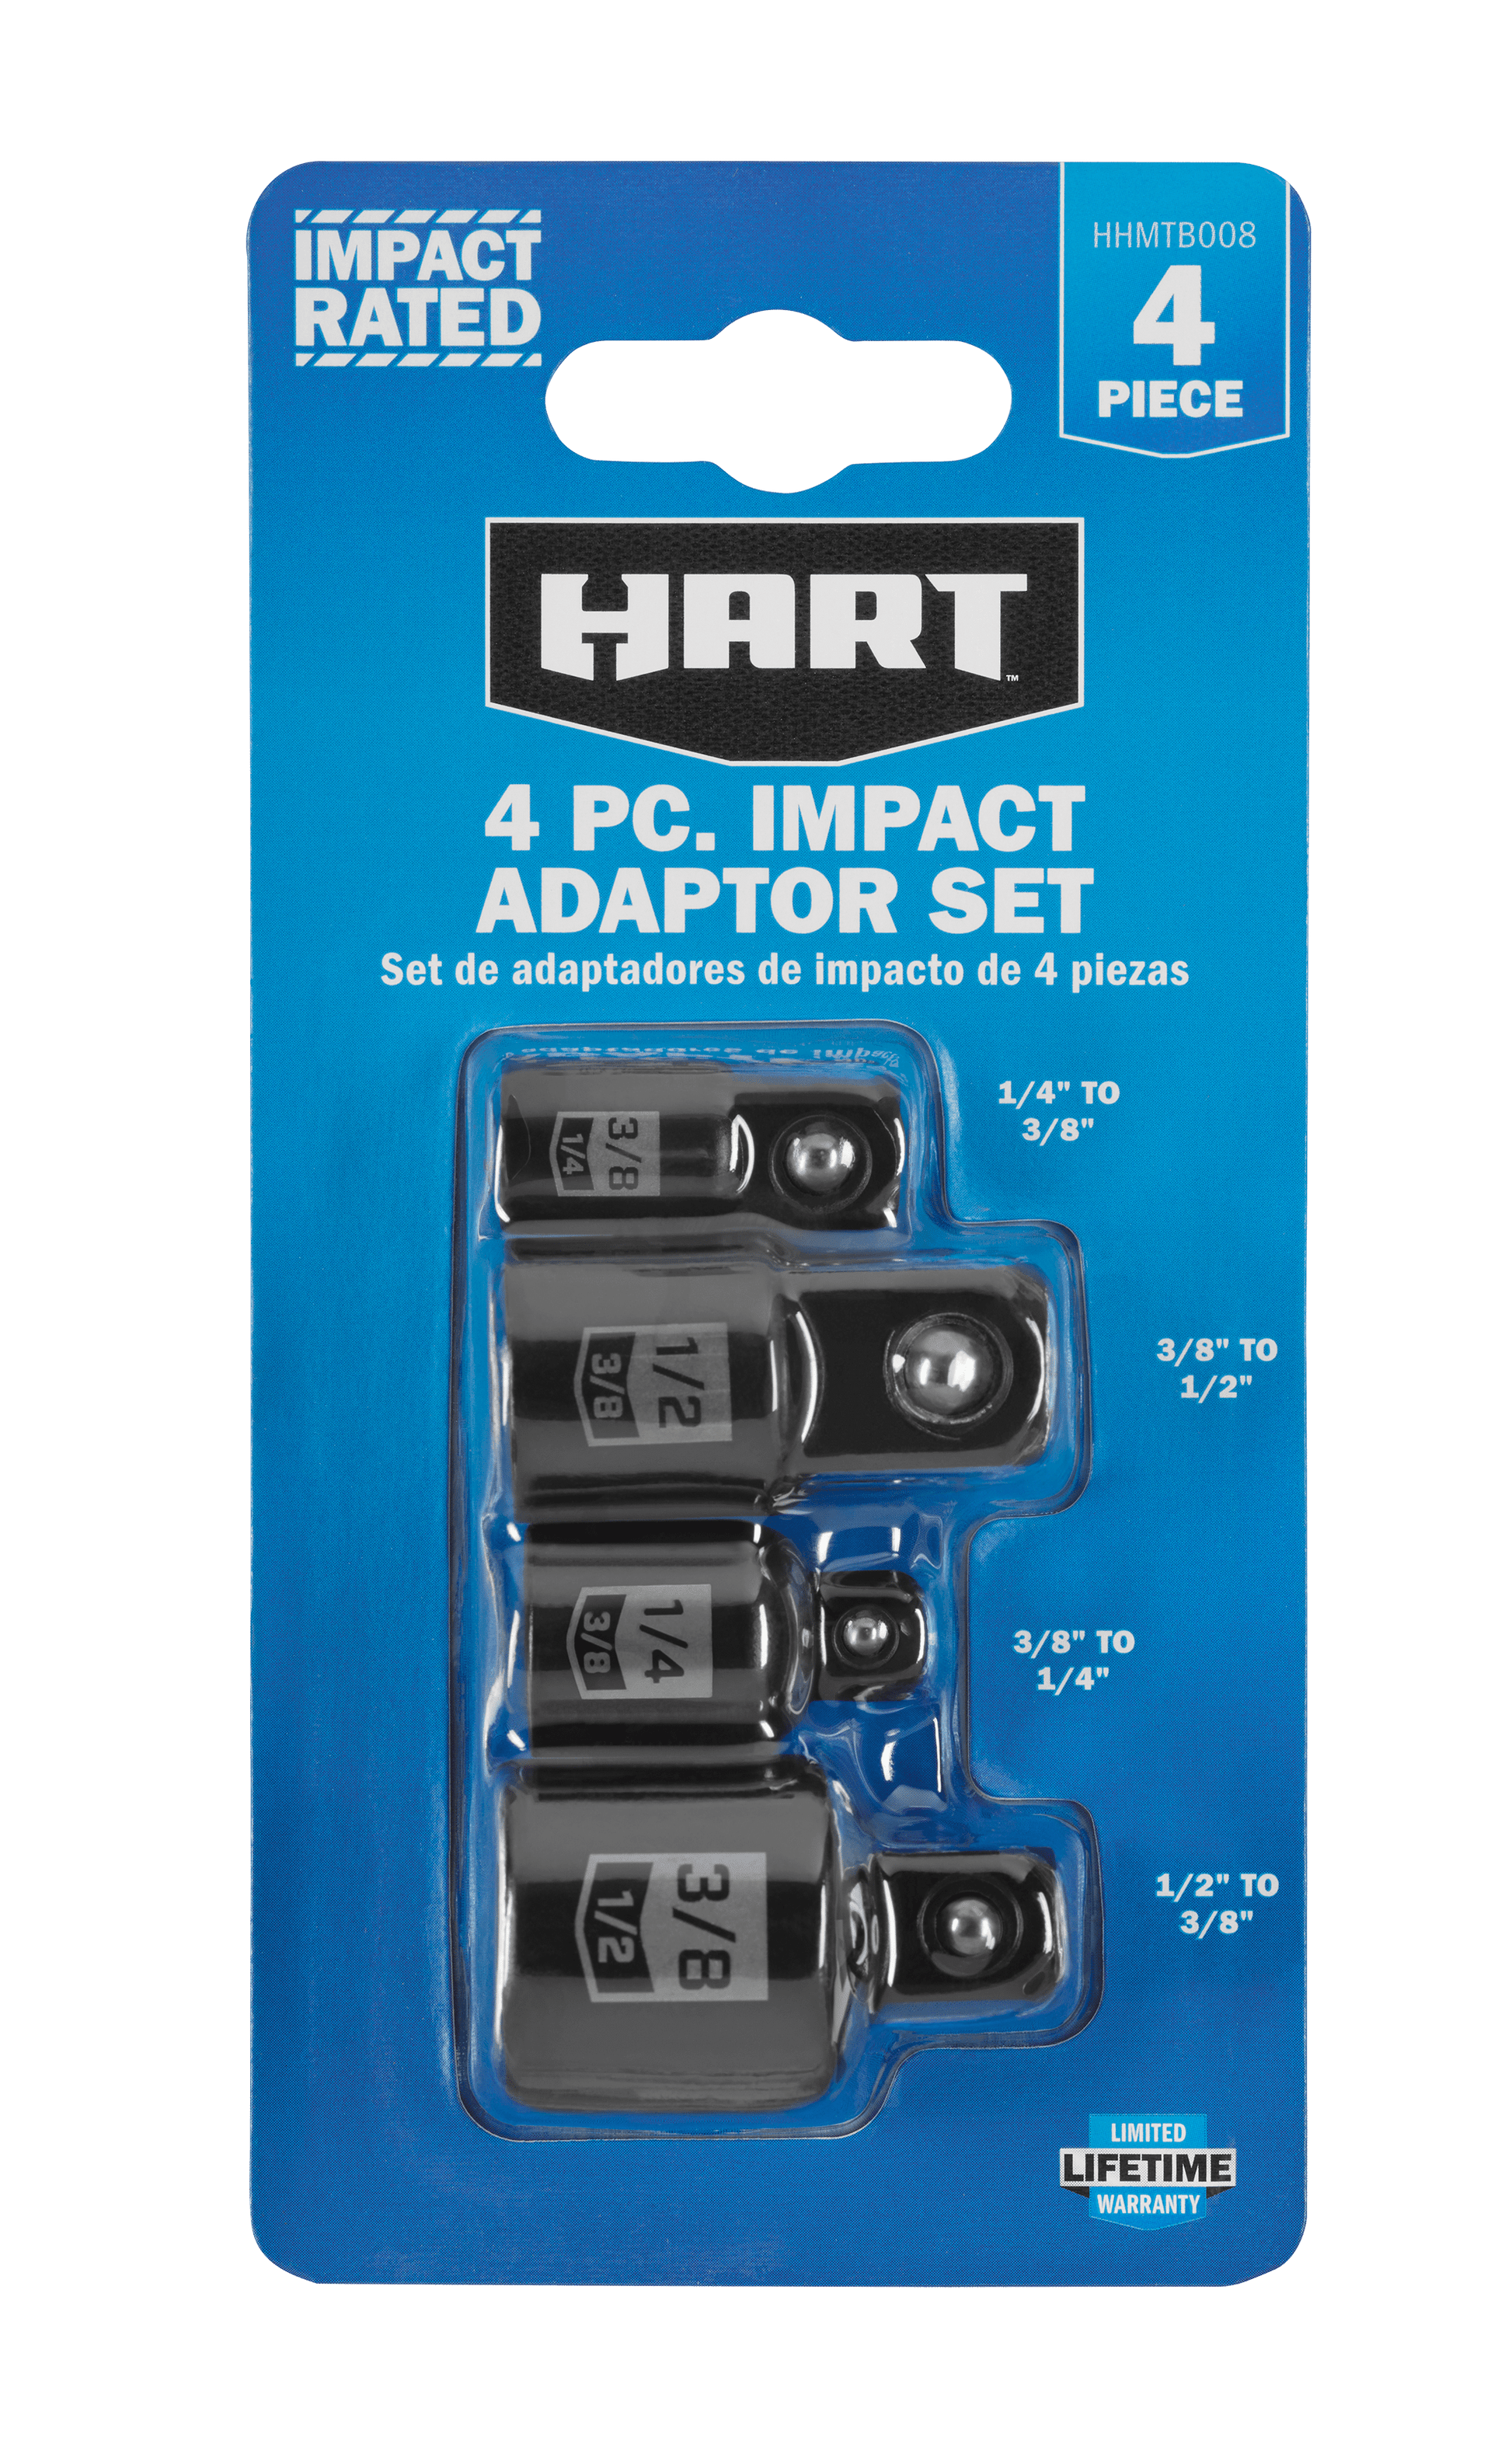 4 PC. Impact Adaptor Set